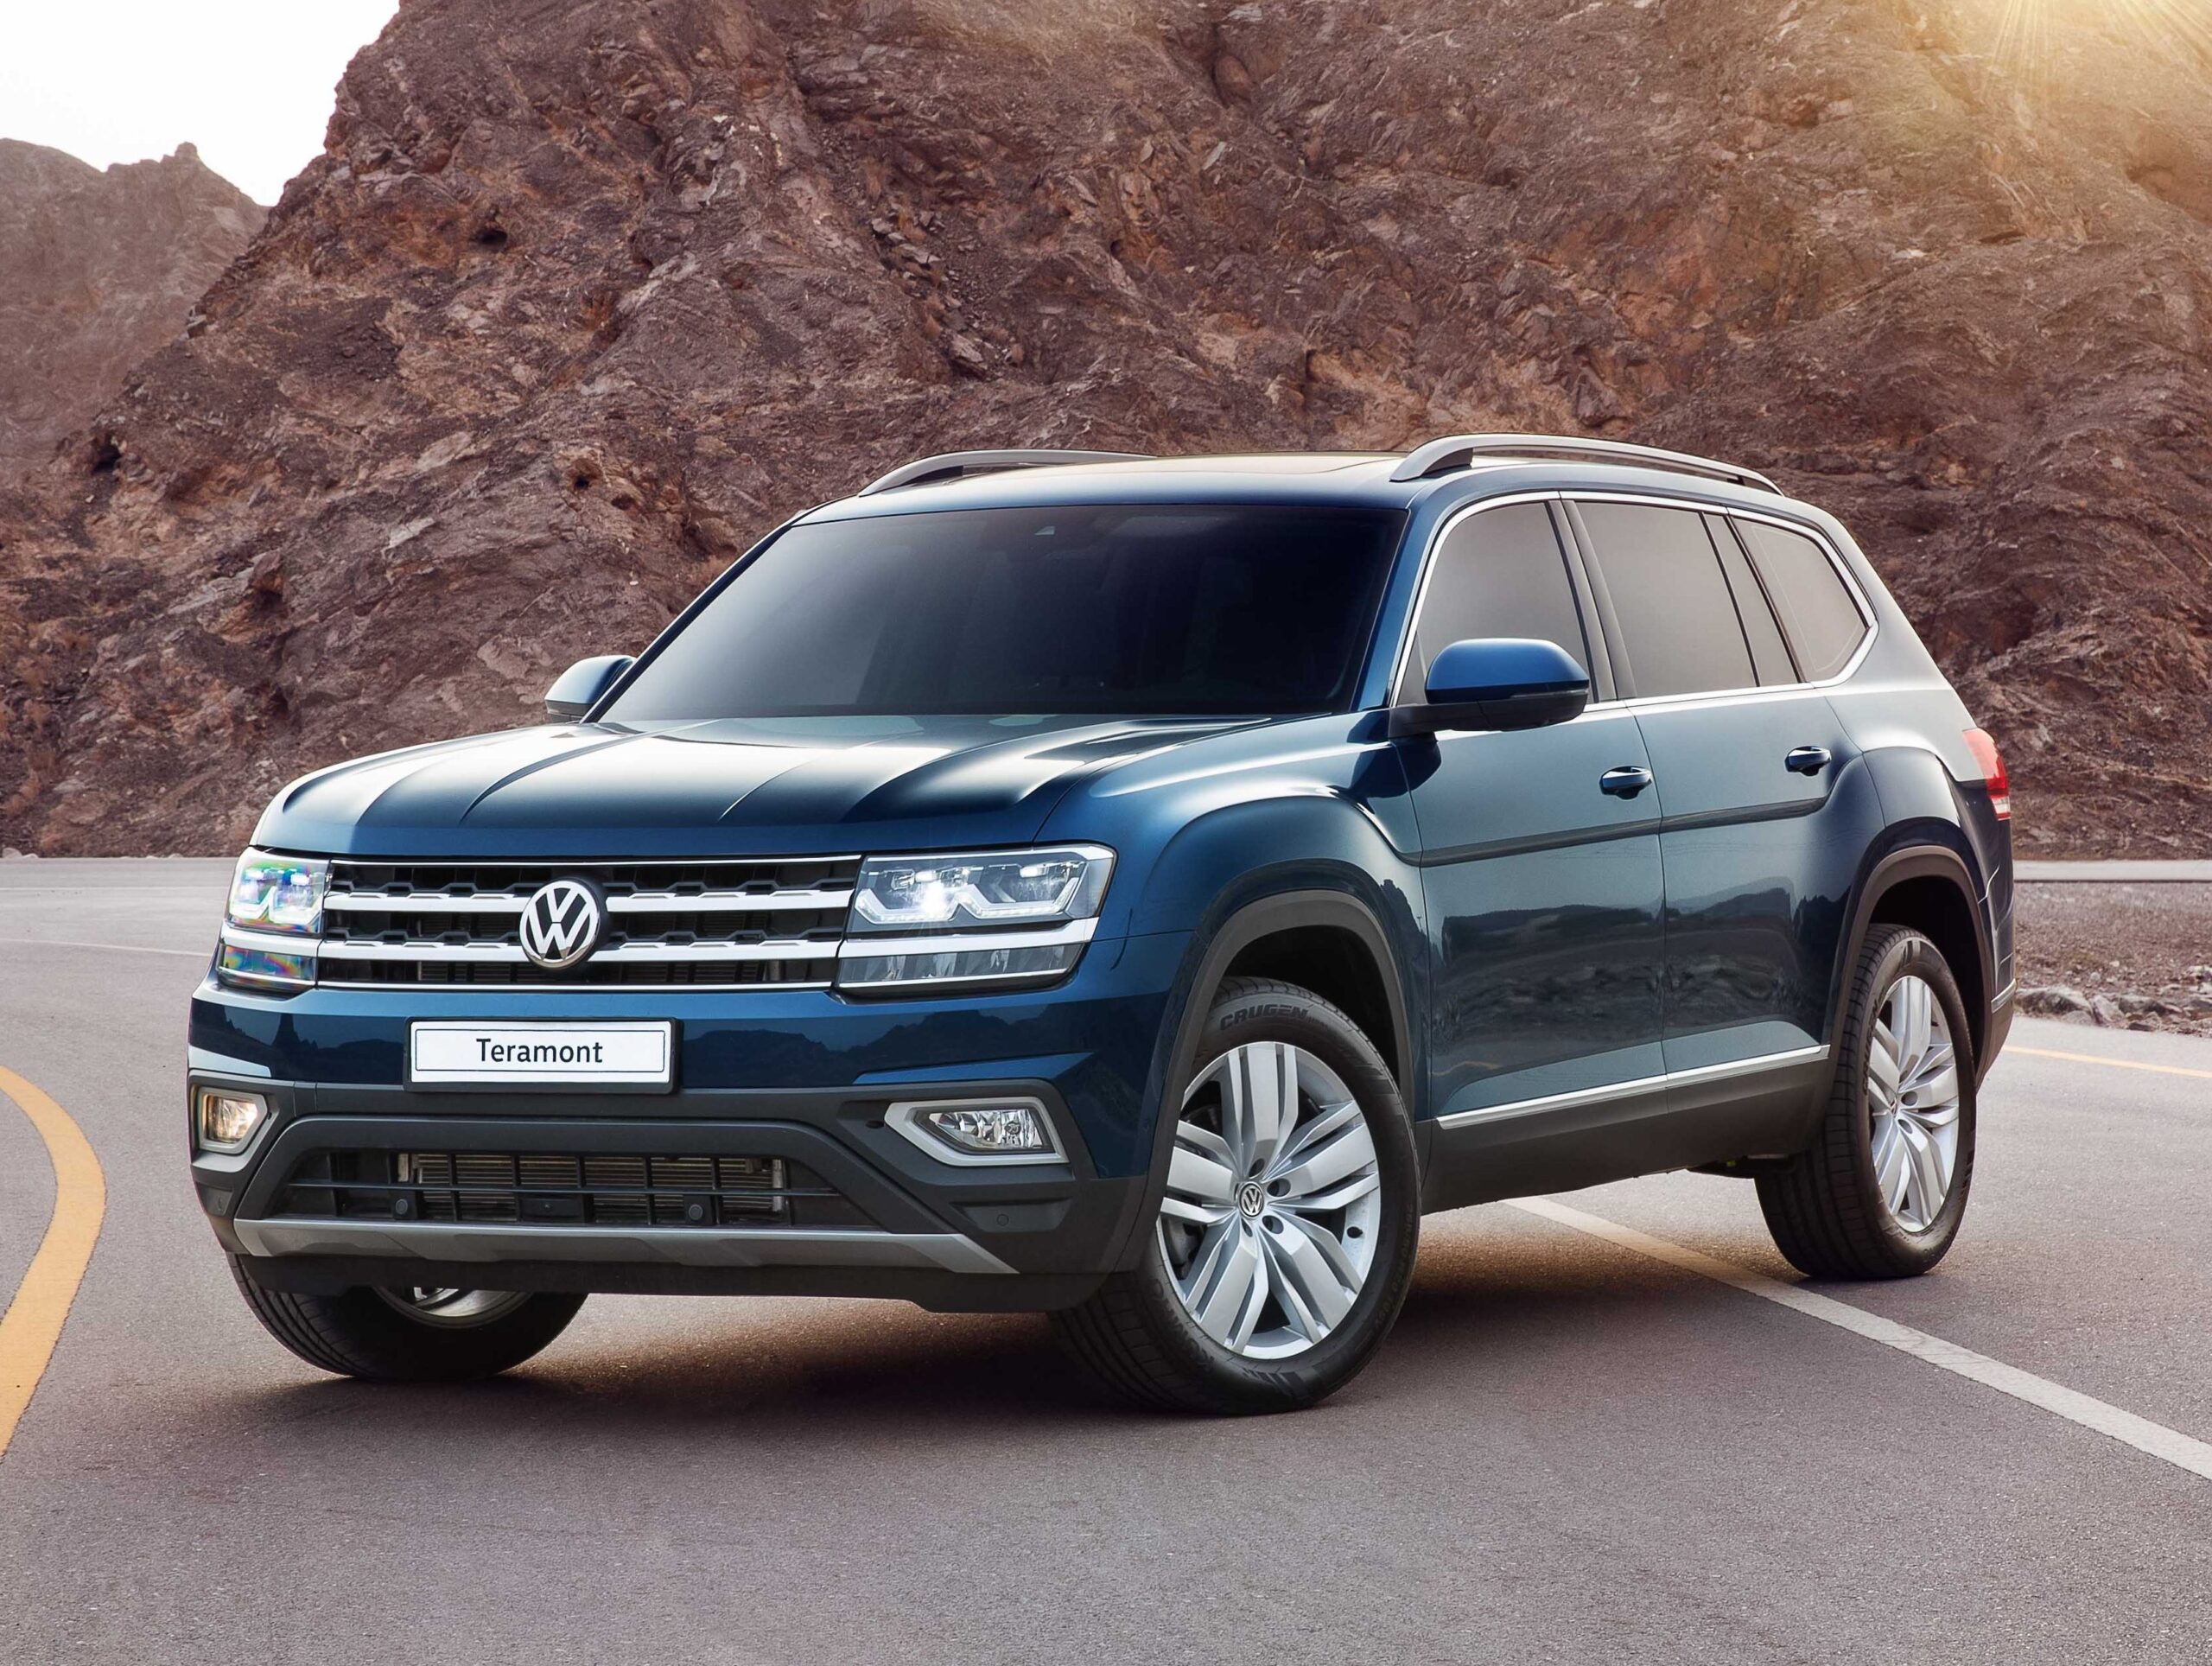 First drive: 2019 Volkswagen Teramont in Oman